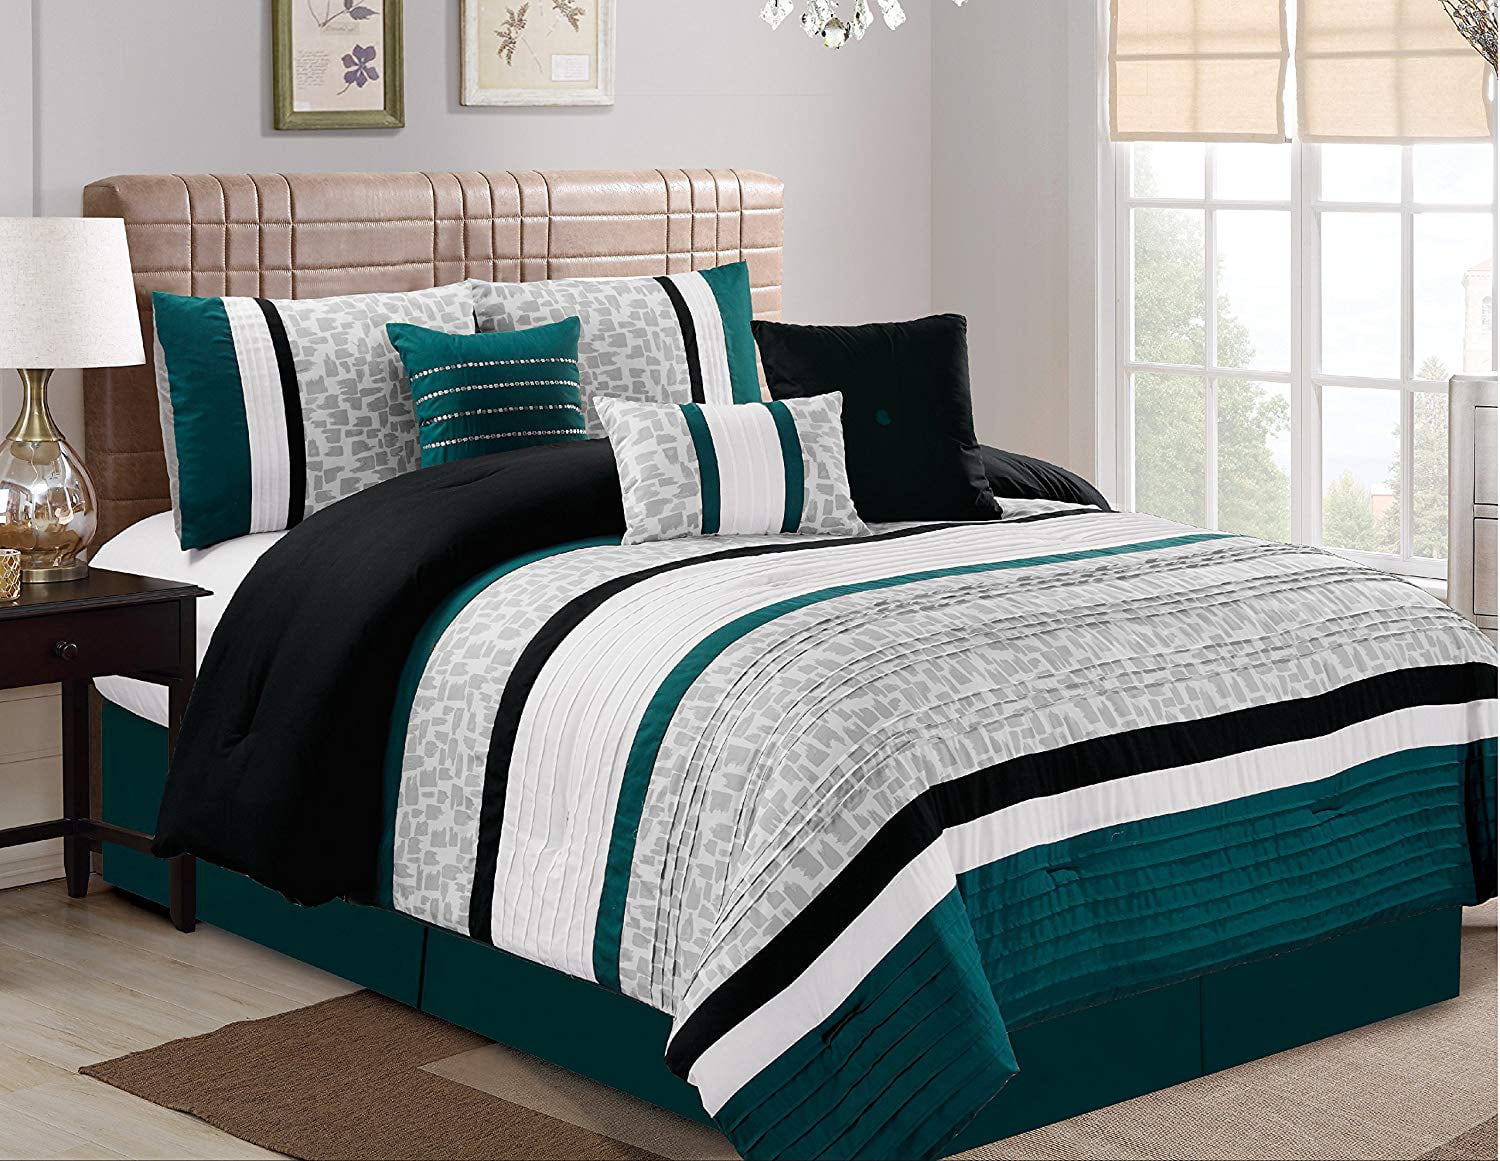 Hgmart Bedding Comforter Set 7 Piece, Queen Bed Comforter Set With Sheets